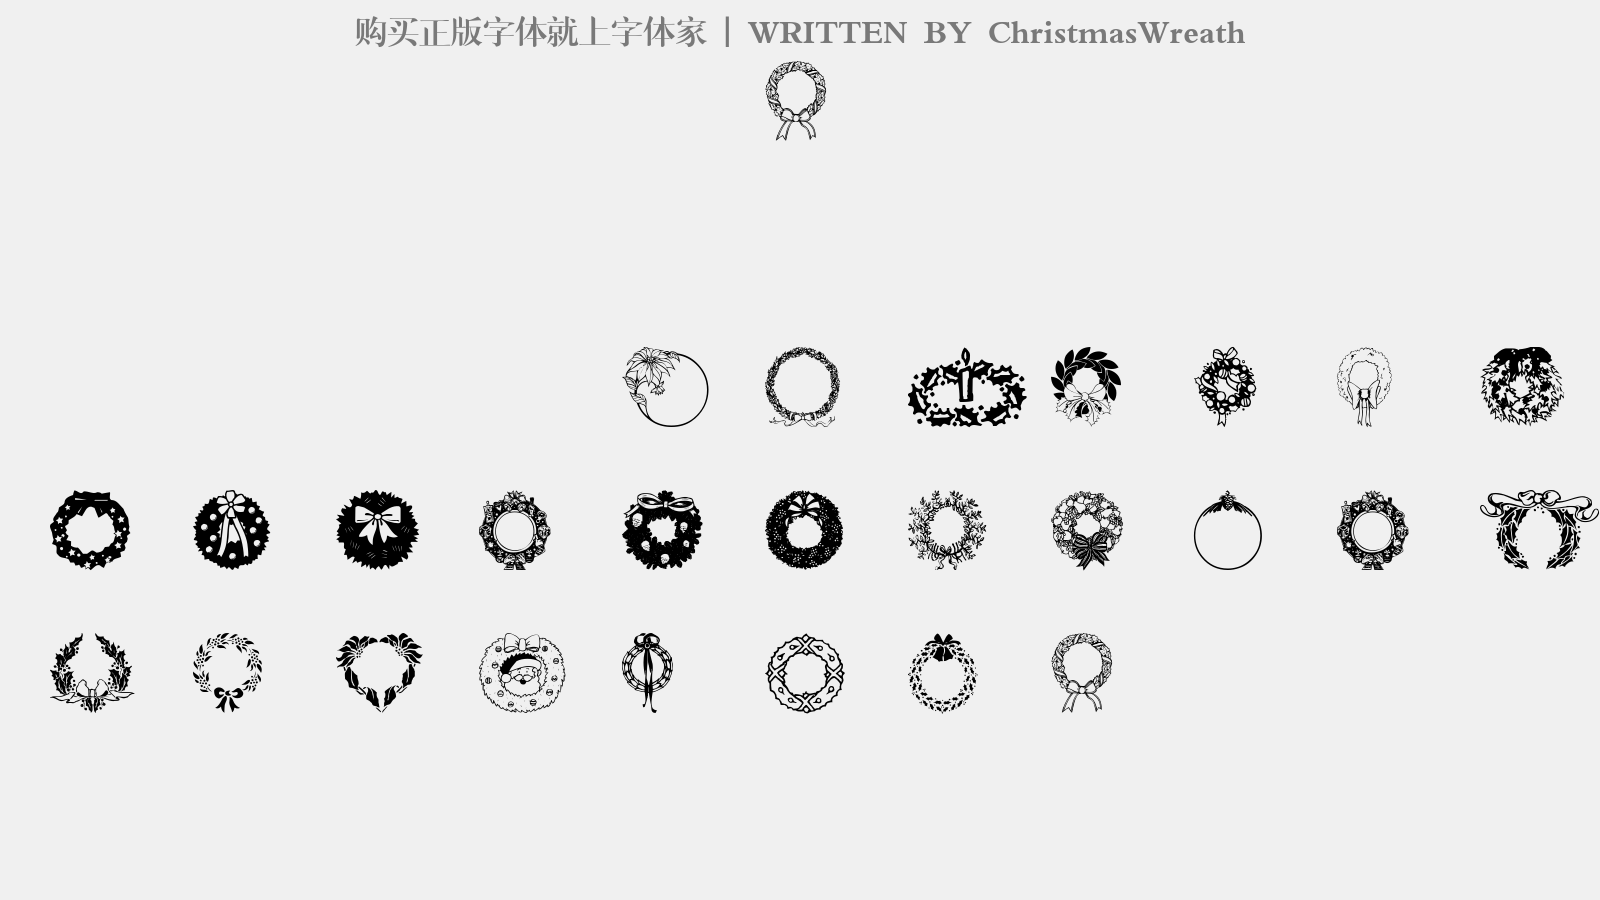 ChristmasWreath - 大写字母/小写字母/数字